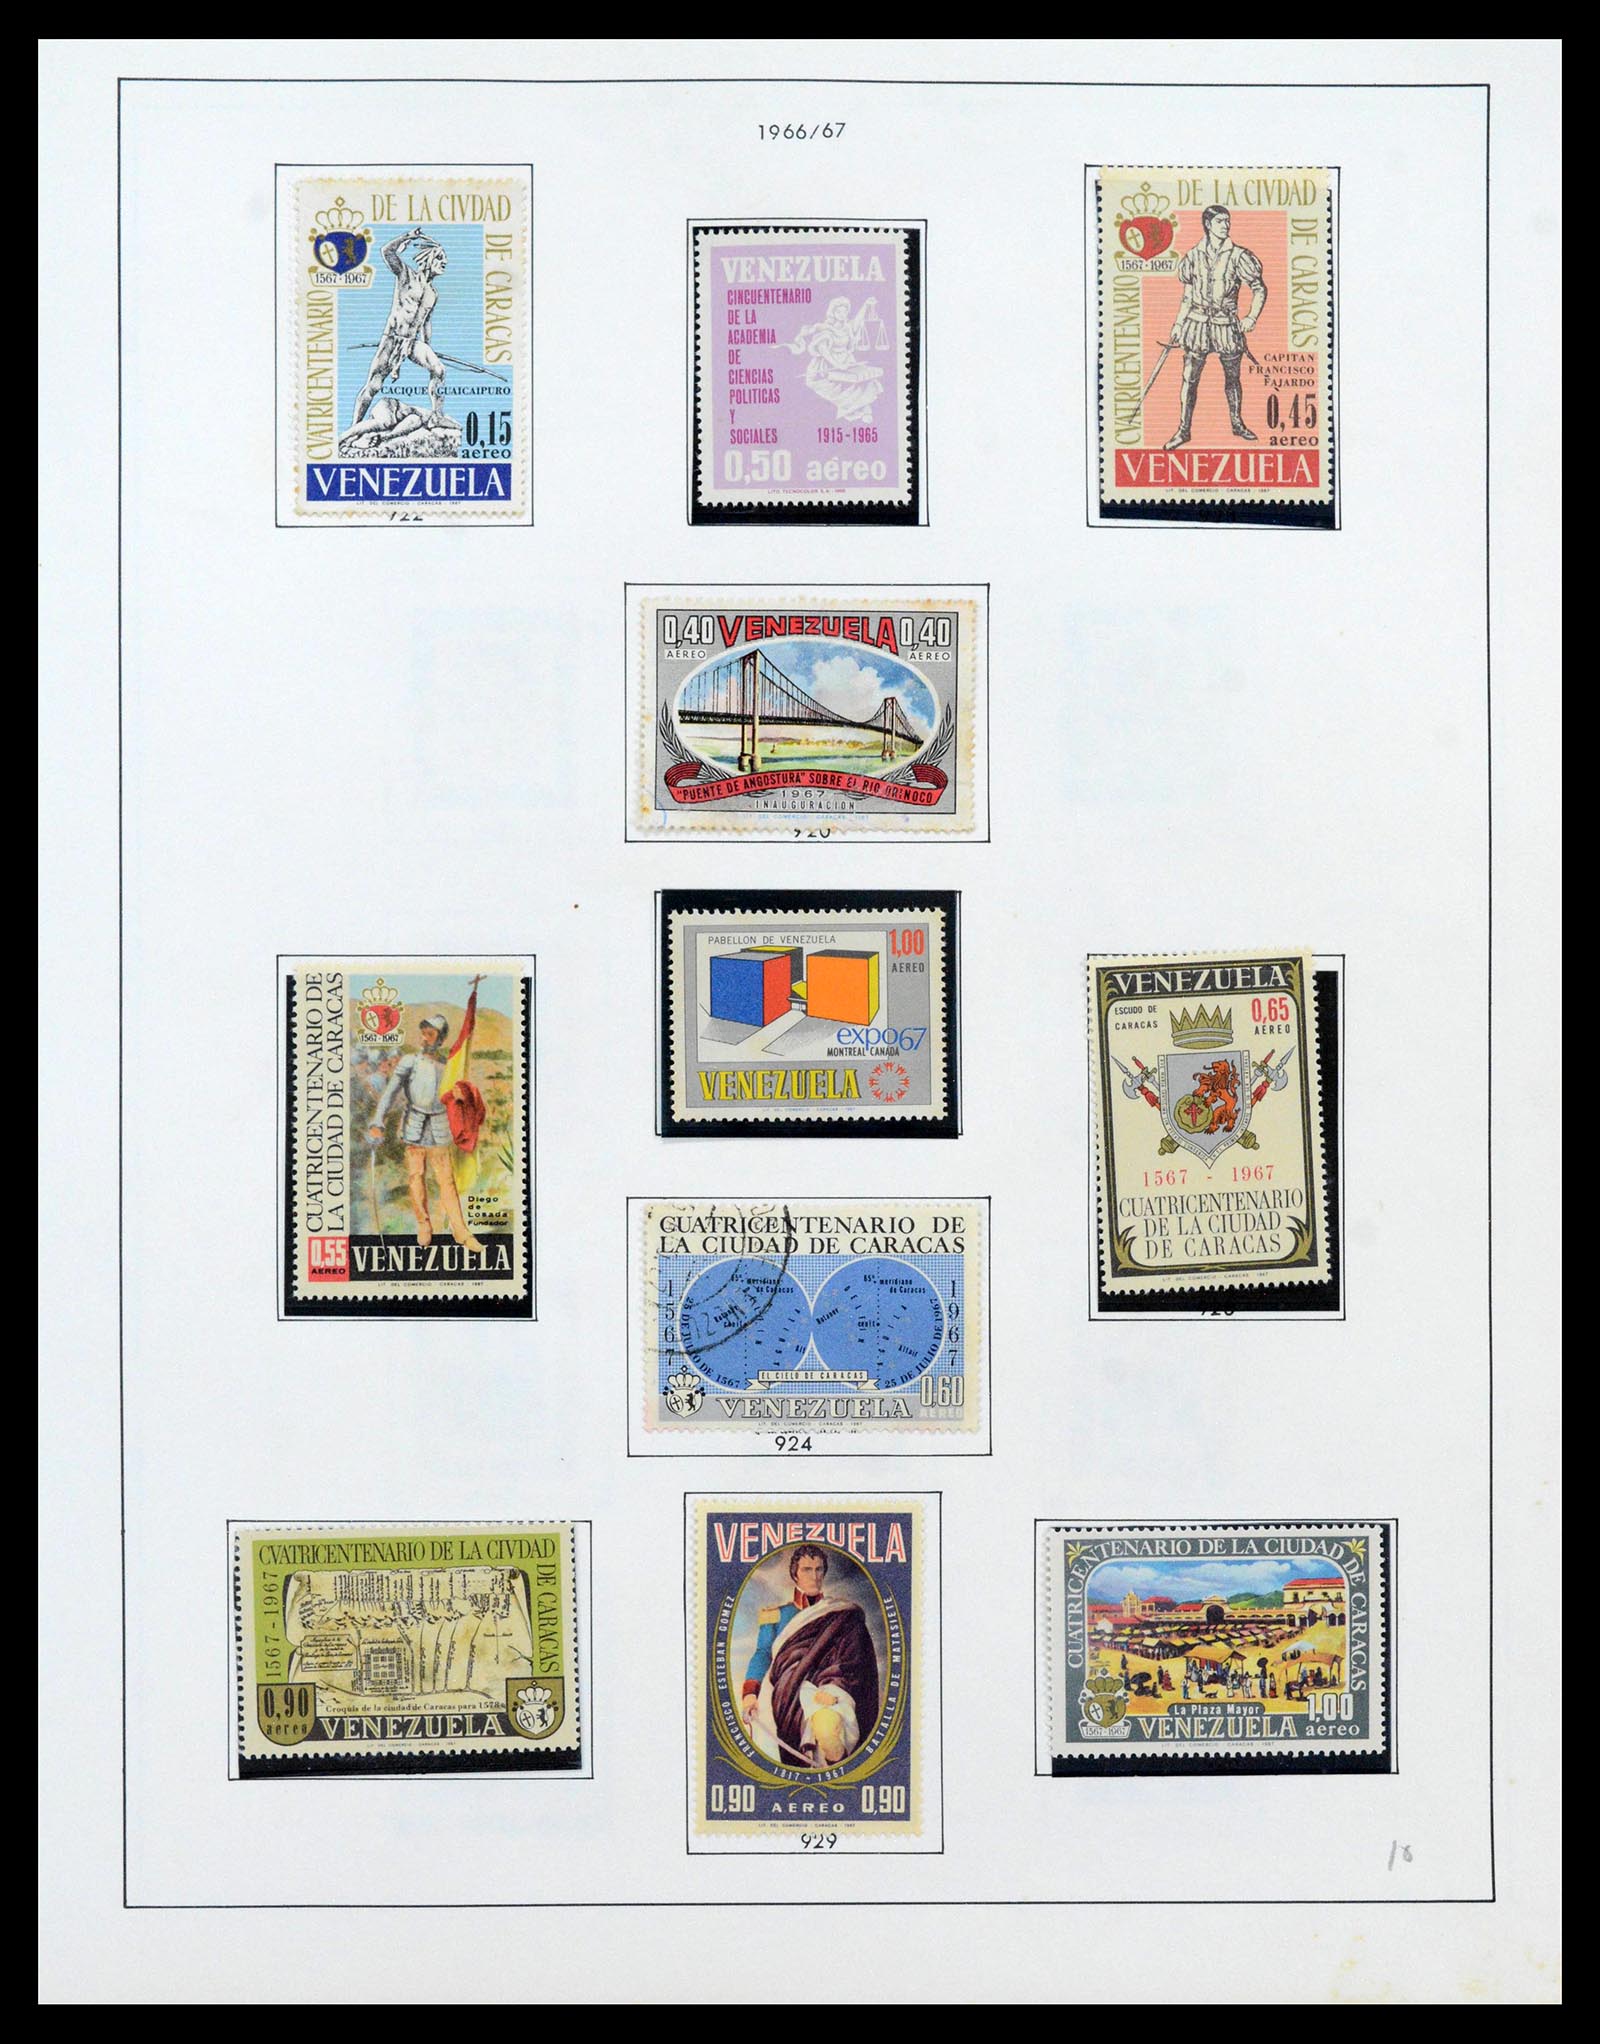 39436 0063 - Stamp collection 39436 Venezuela 1859-1985.